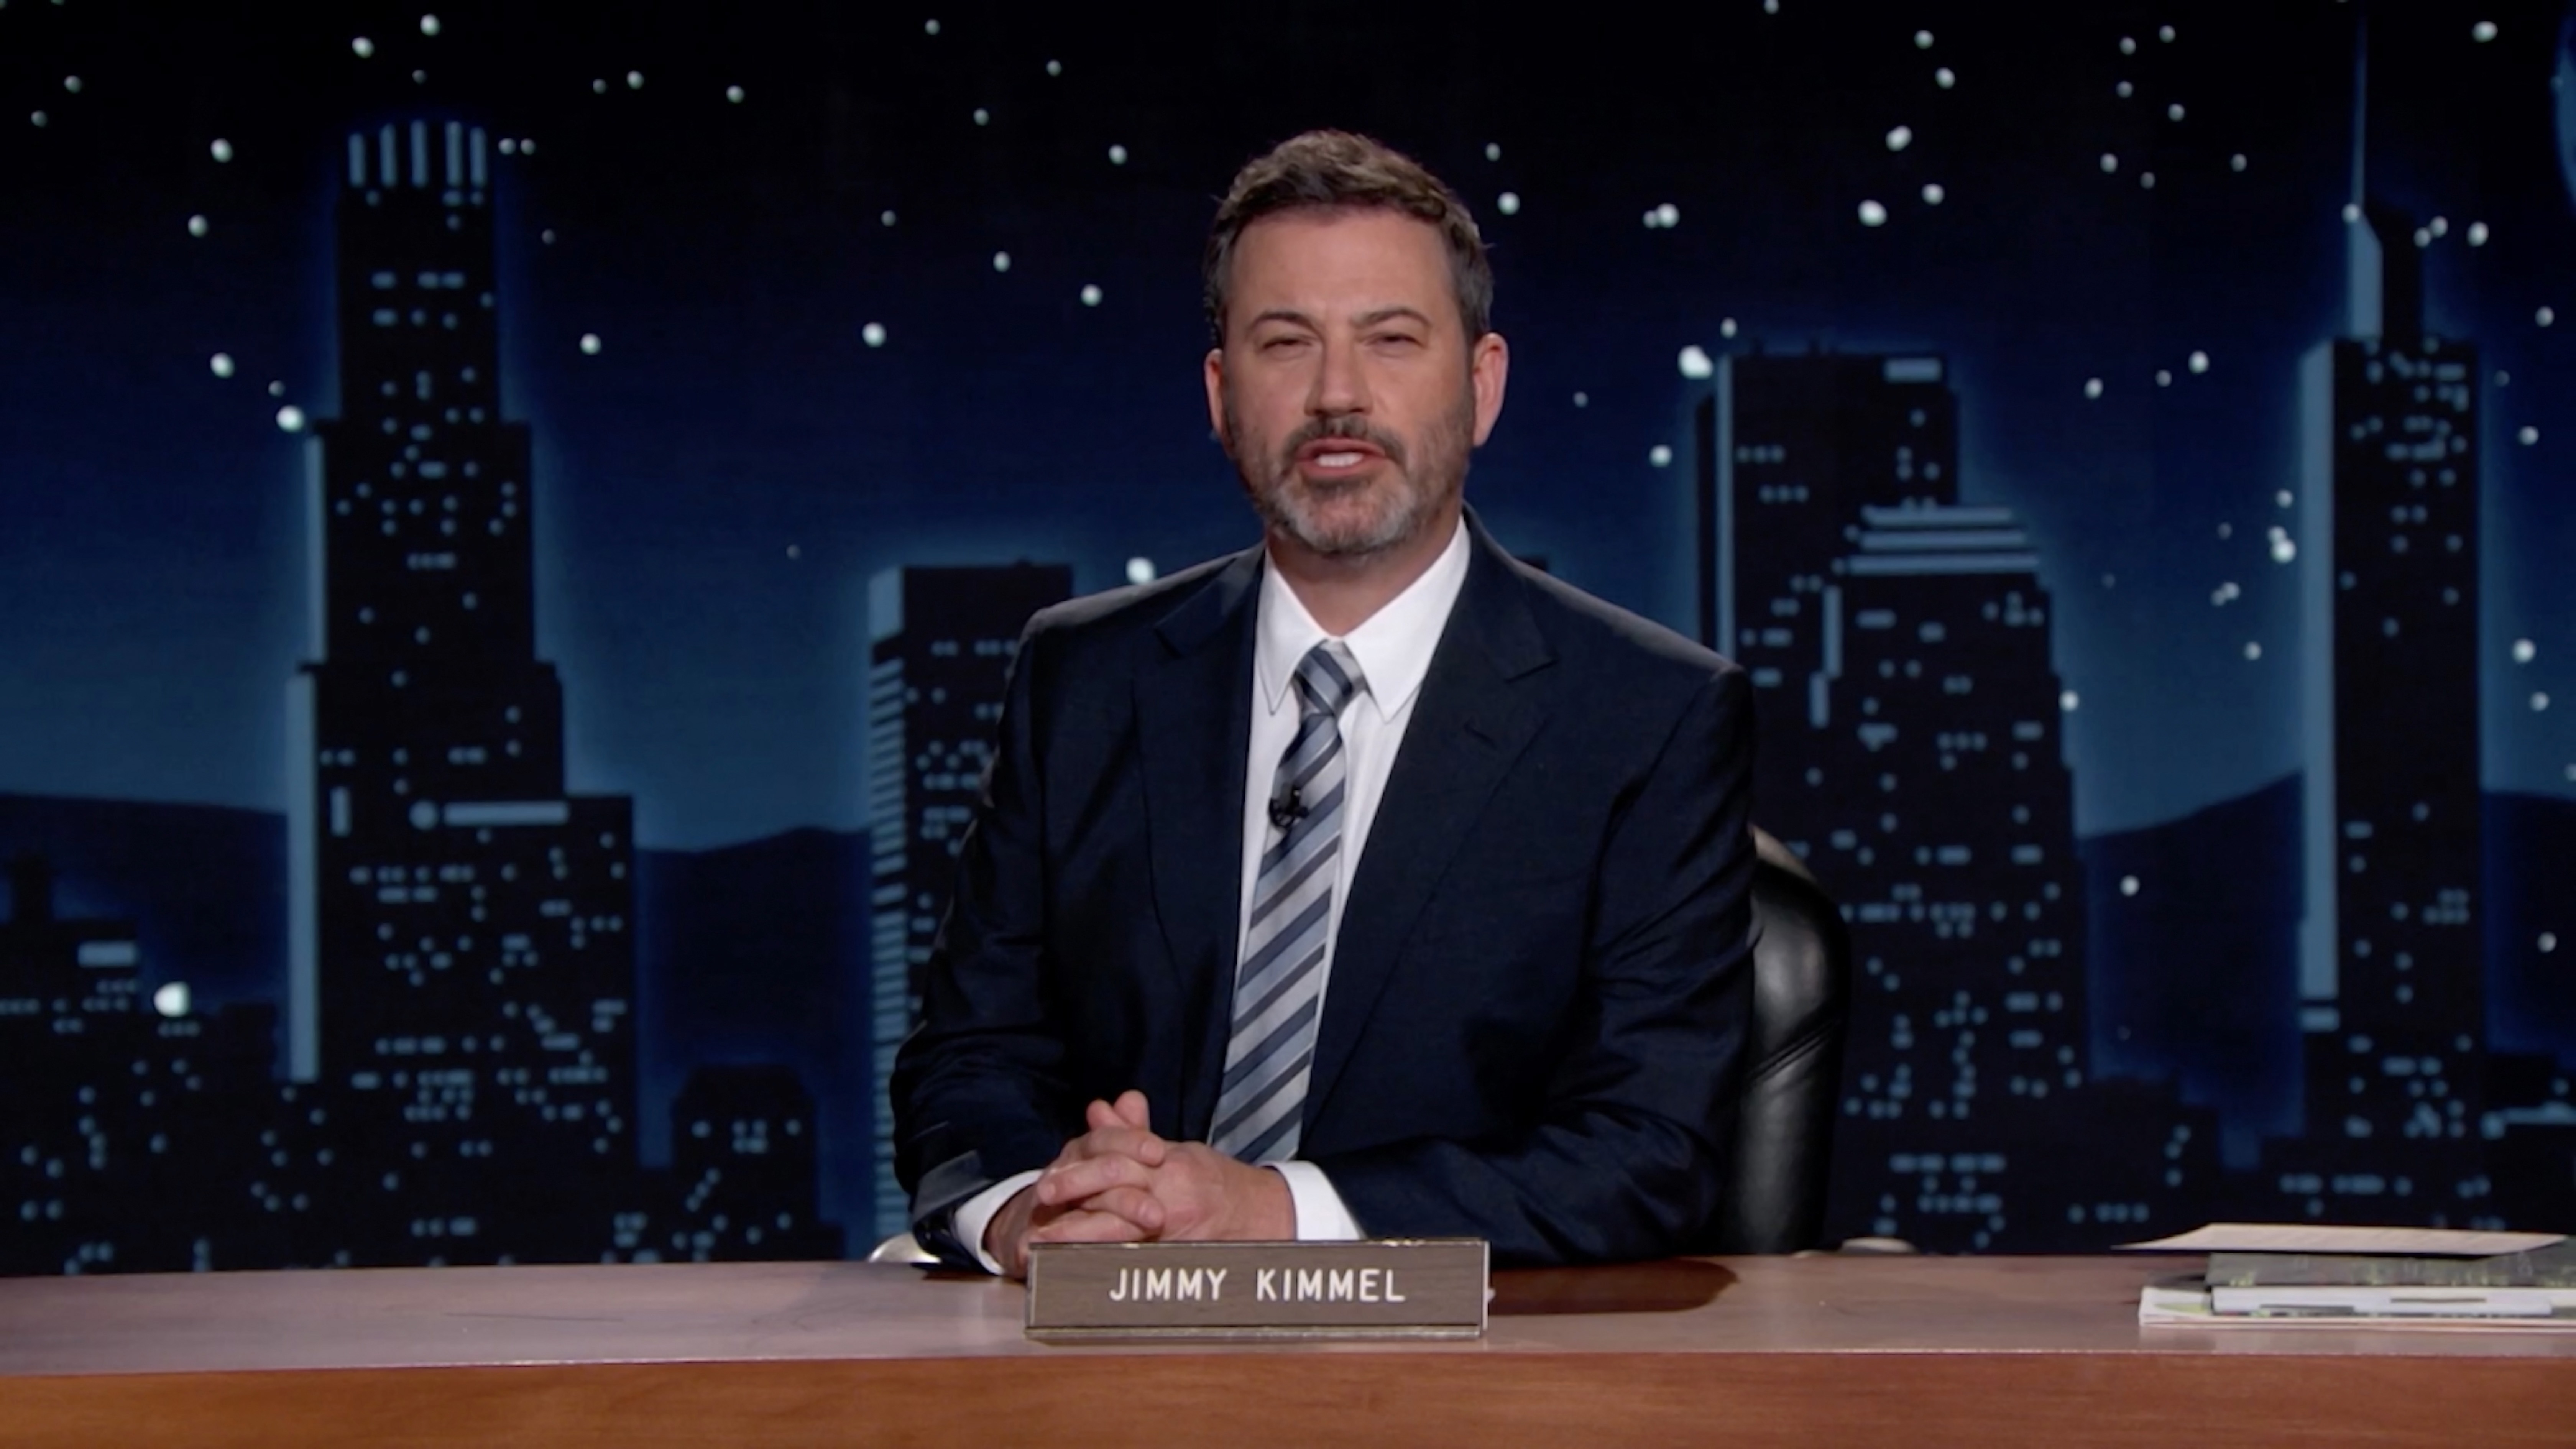 Jimmy Kimmel to Sponsor Bowl Game Next Season at Los Angeles' SoFi